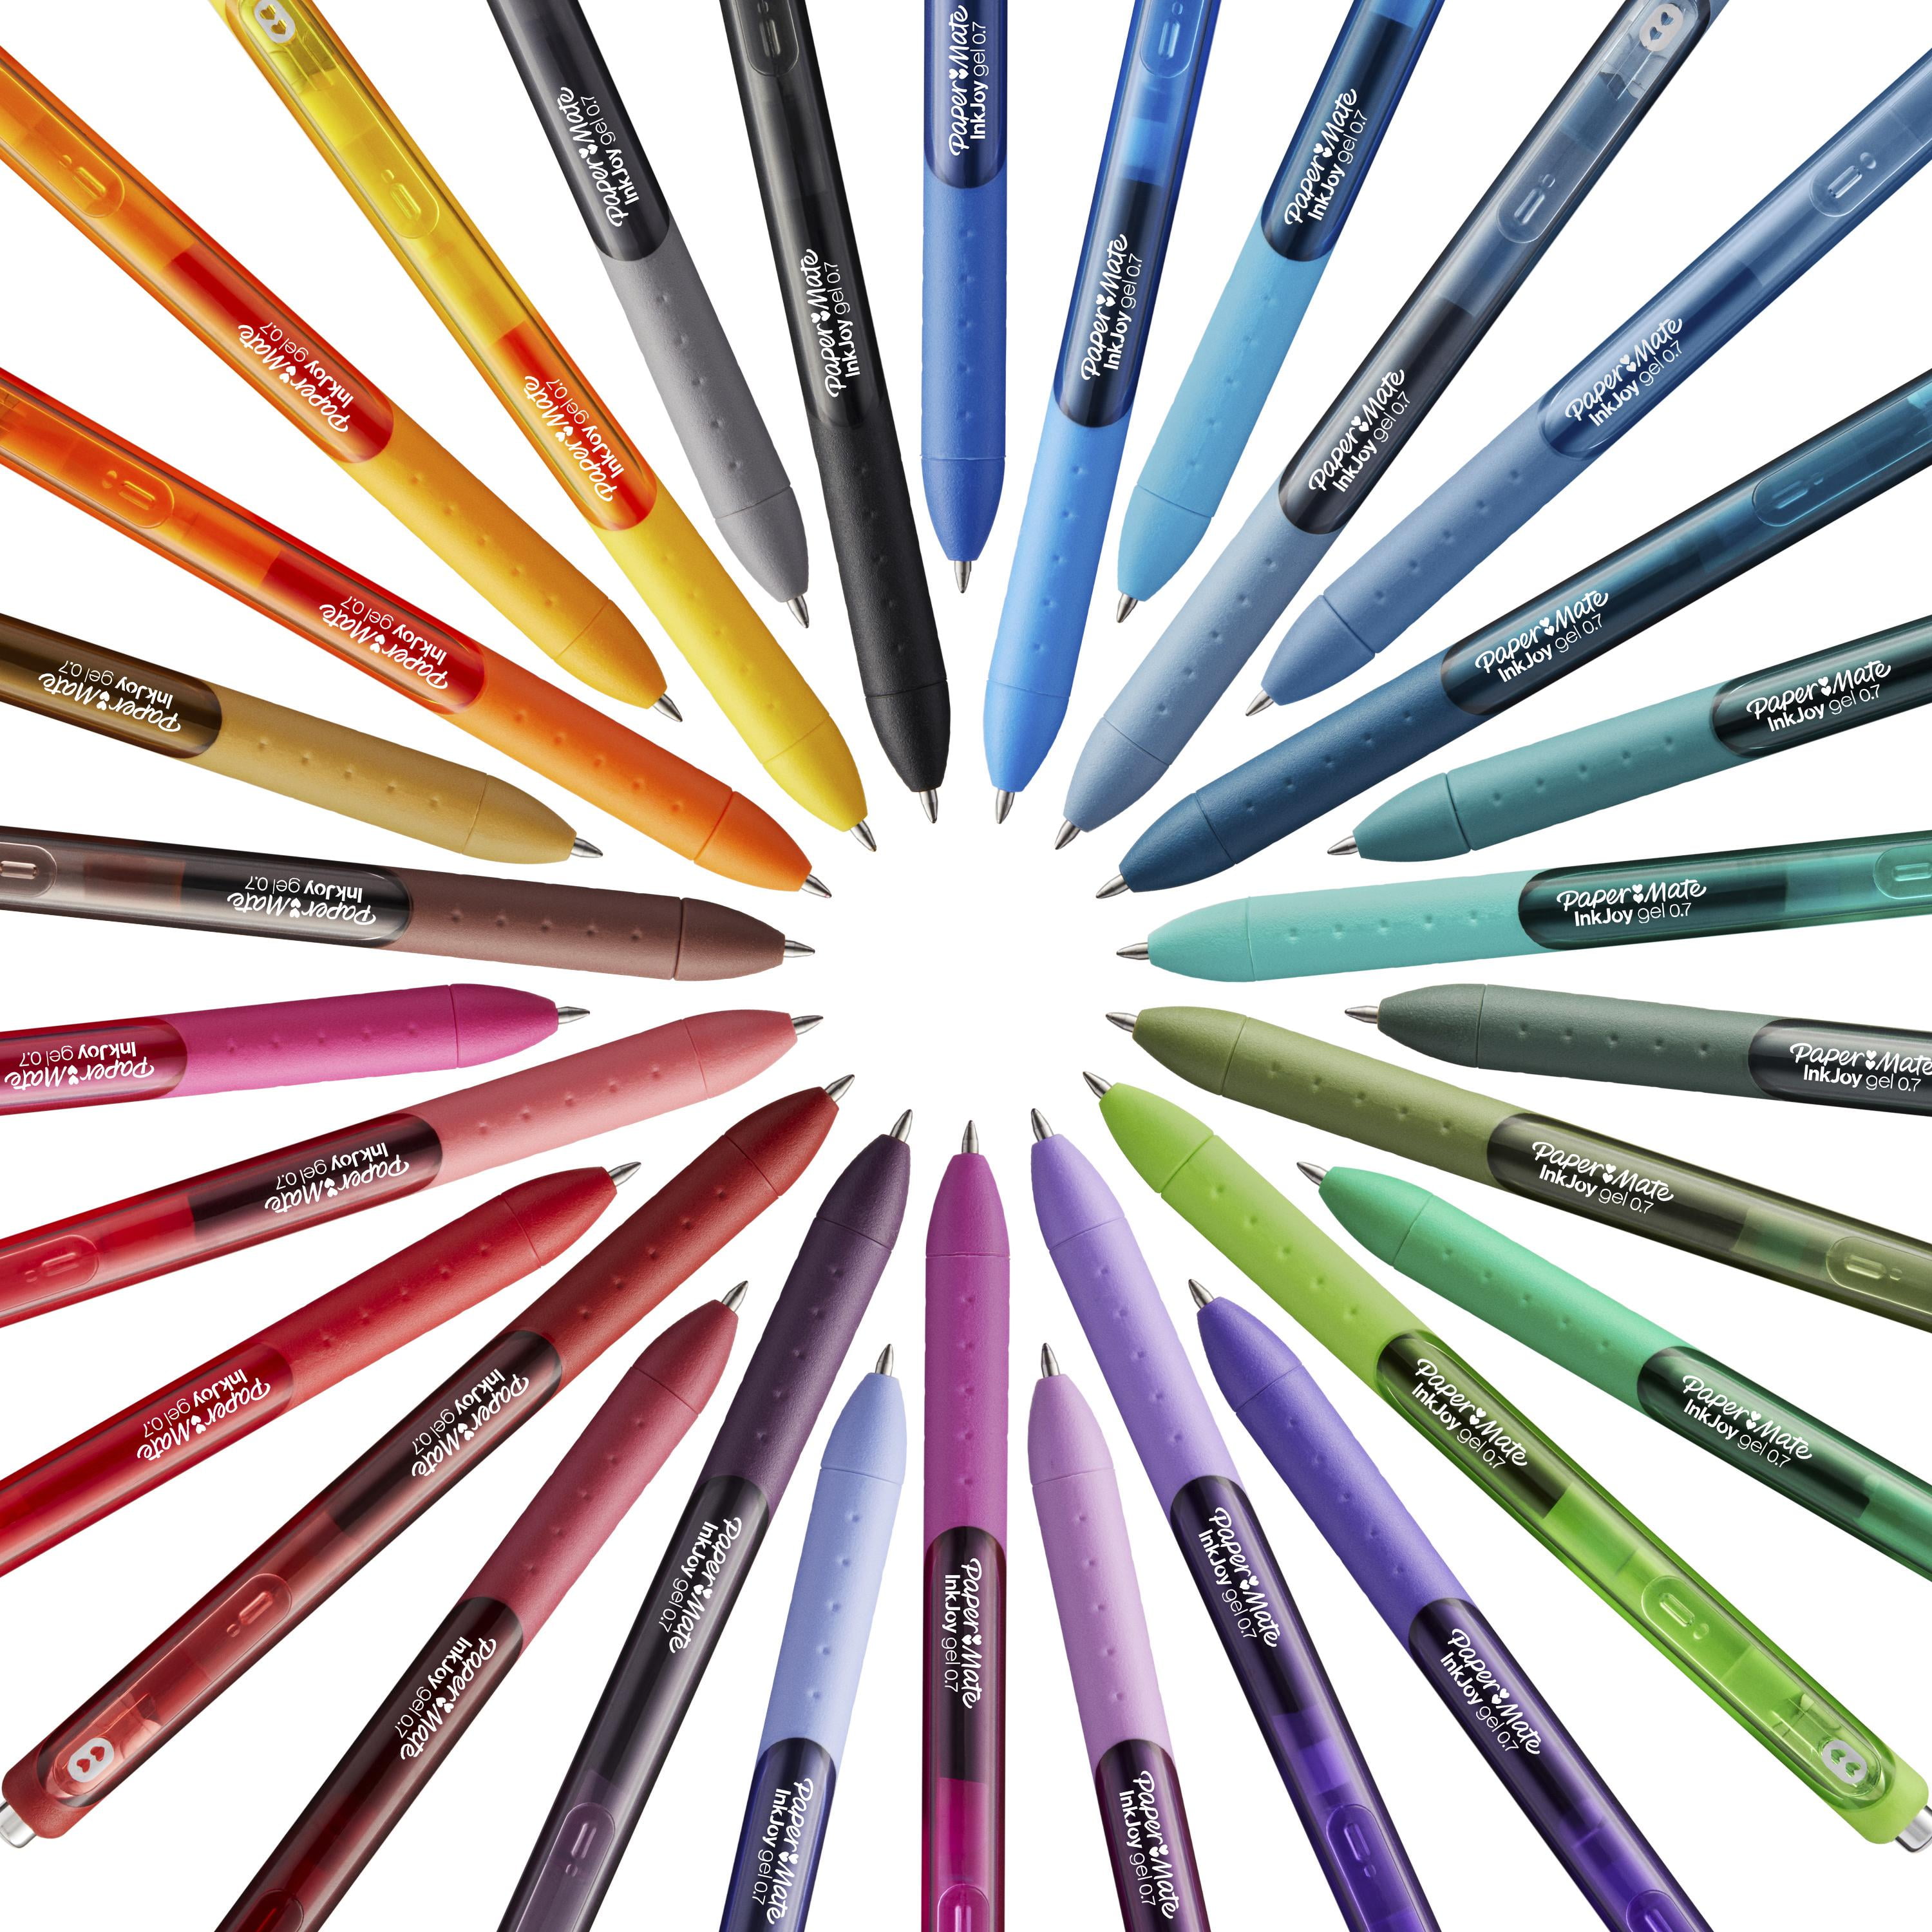 Paper Mate Inkjoy Gel Pens .7mm 6 Ct ea - Assorted- 48 Pack - Wholesal